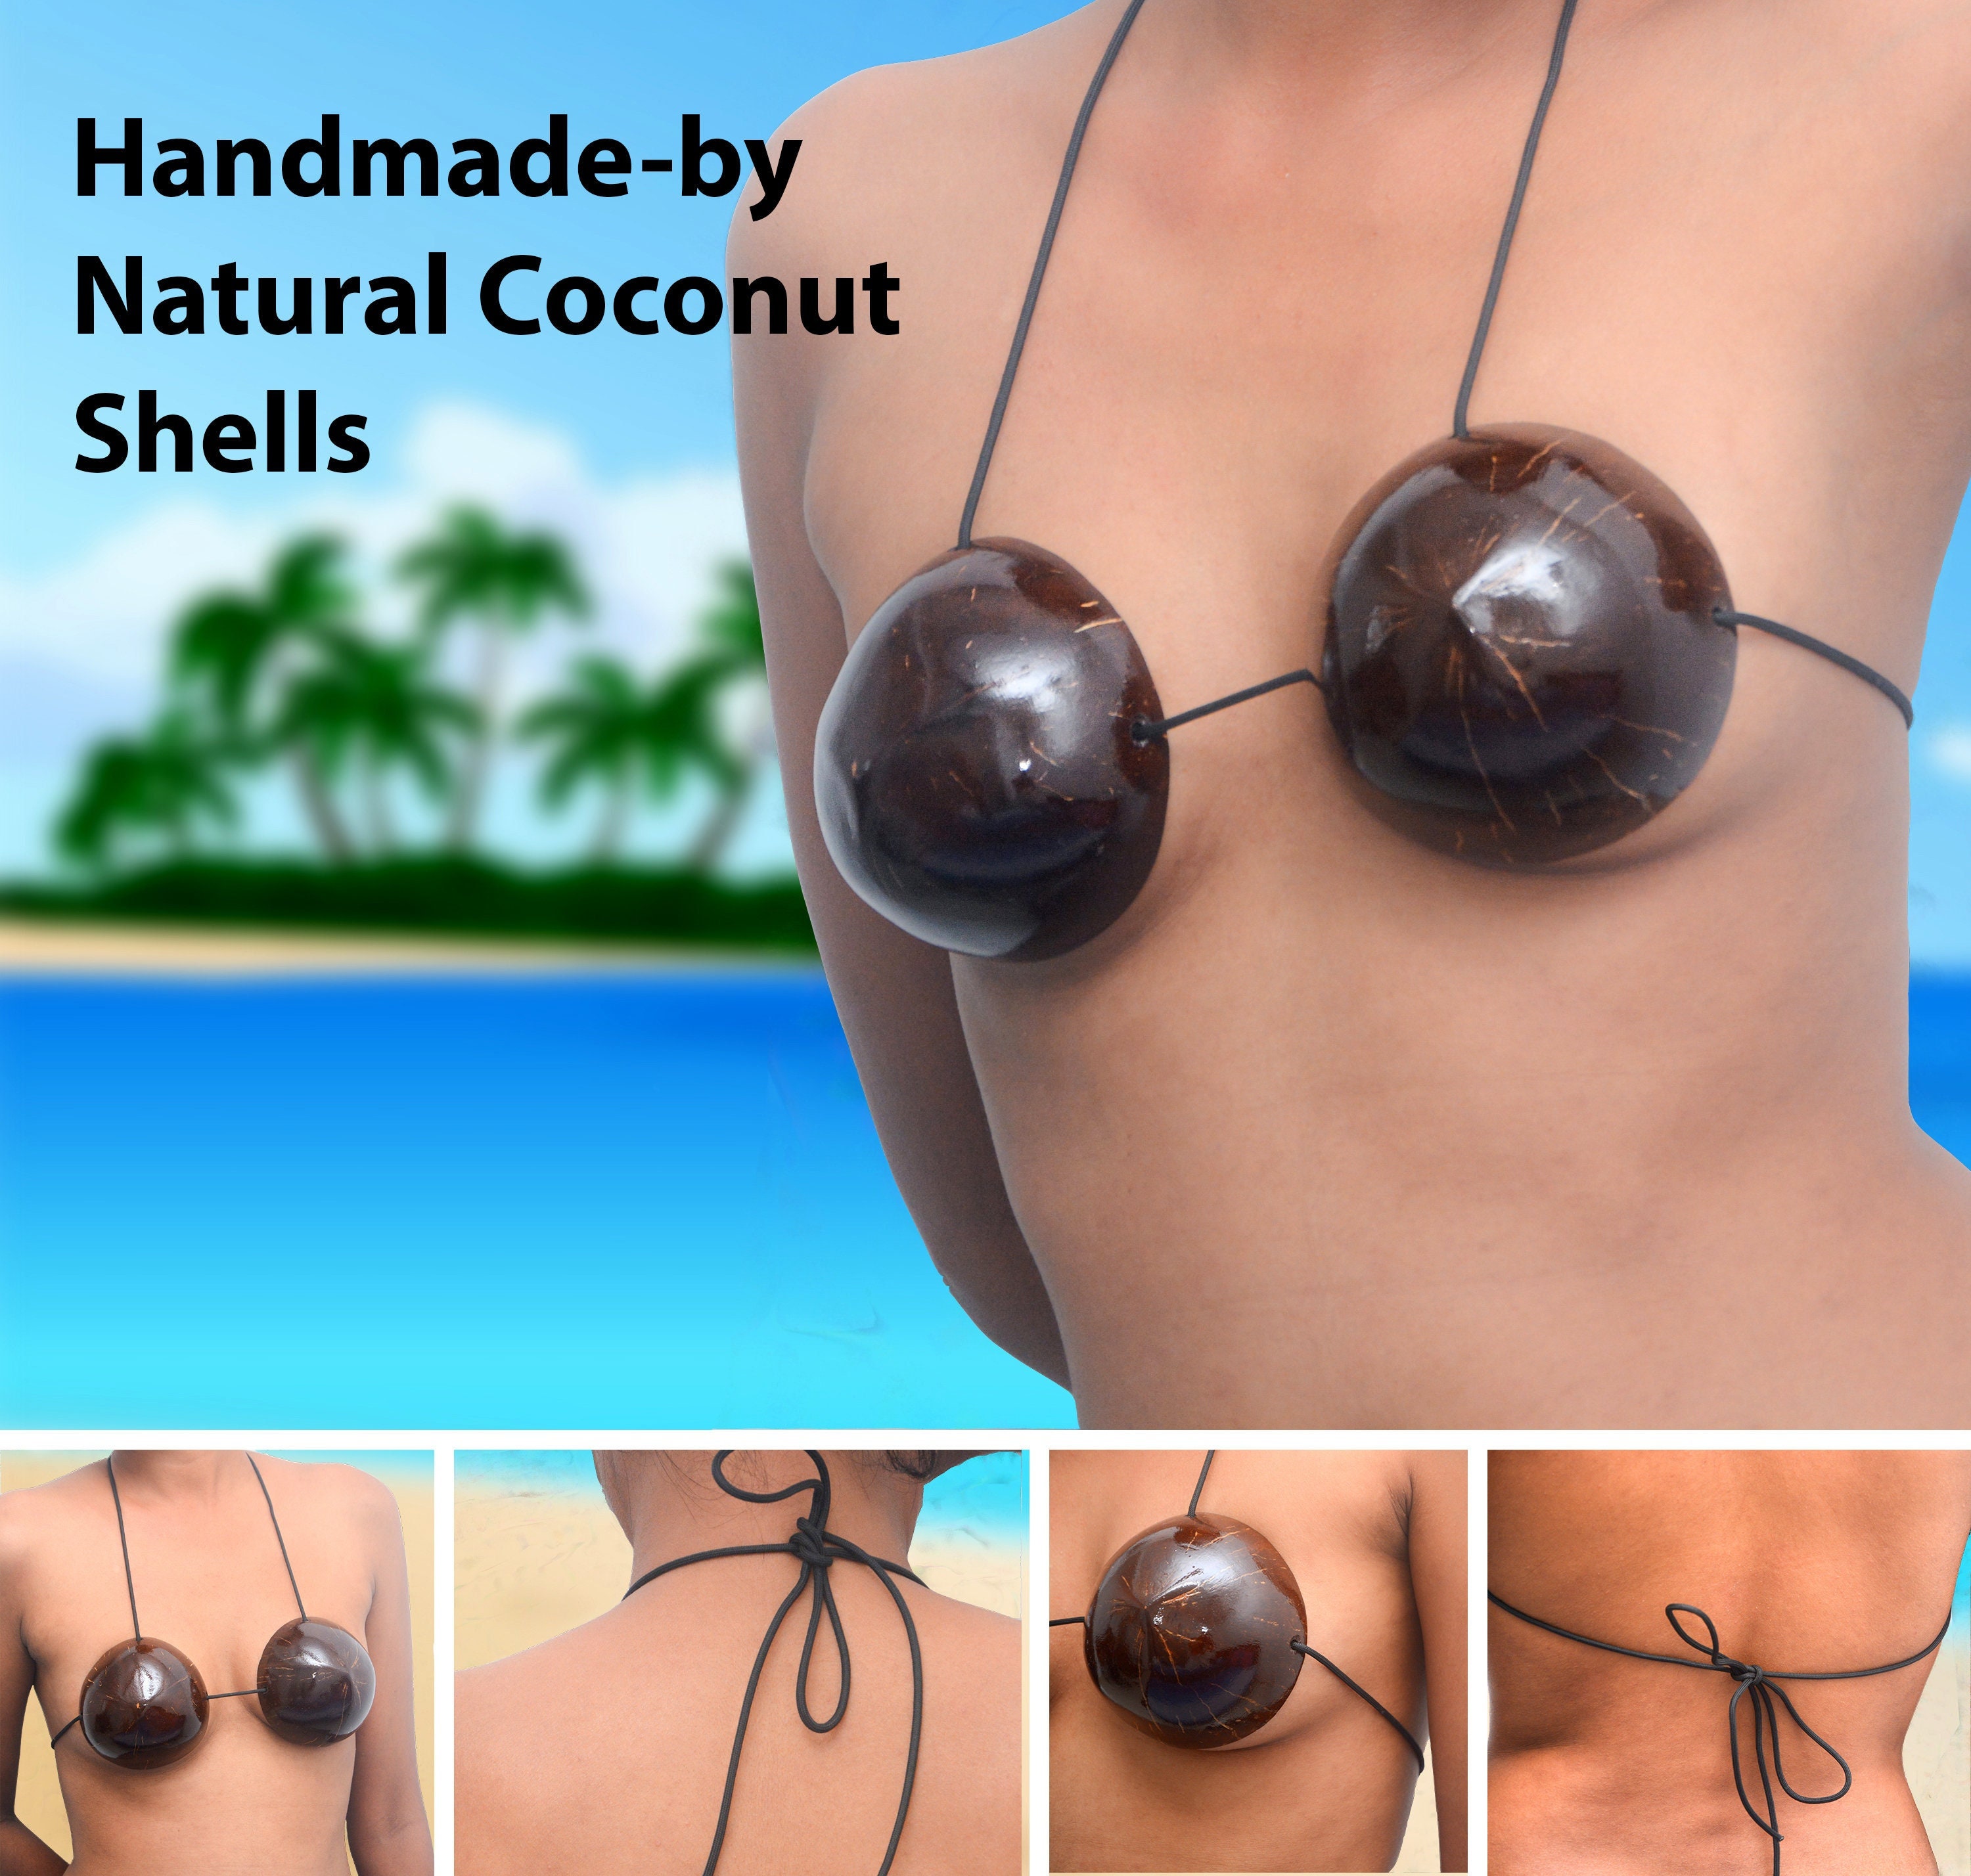 Handmade Natural Coconut Shell Bras Hawaii Beach Bikini Brassieres